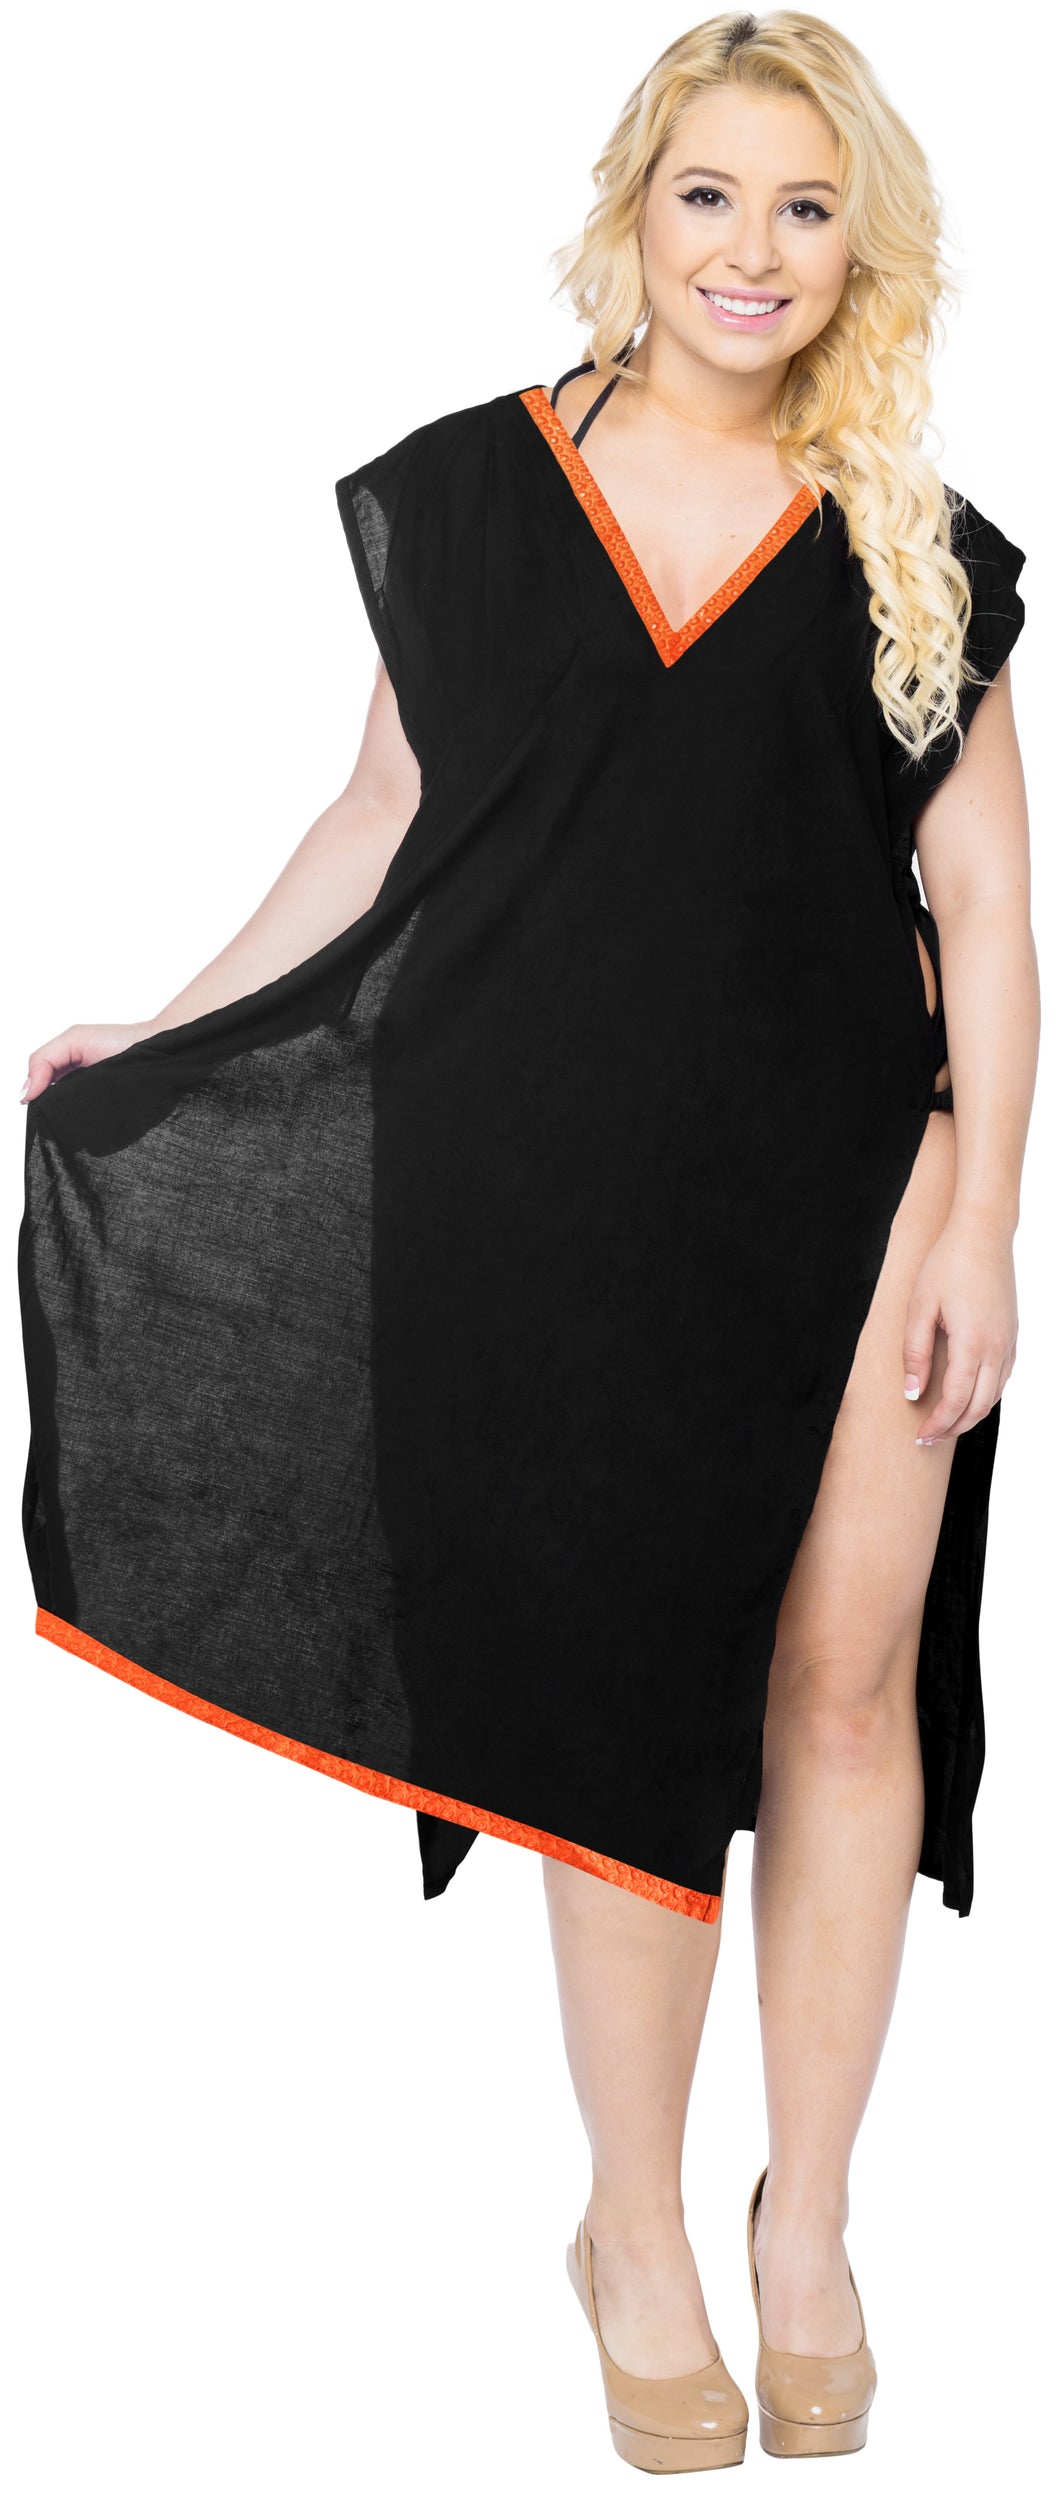 LA LEELA Women's Beach Swimsuit for Women Cover-ups Bikini Cover-Up Solid Plain Black OSFM 8-14[M-L]